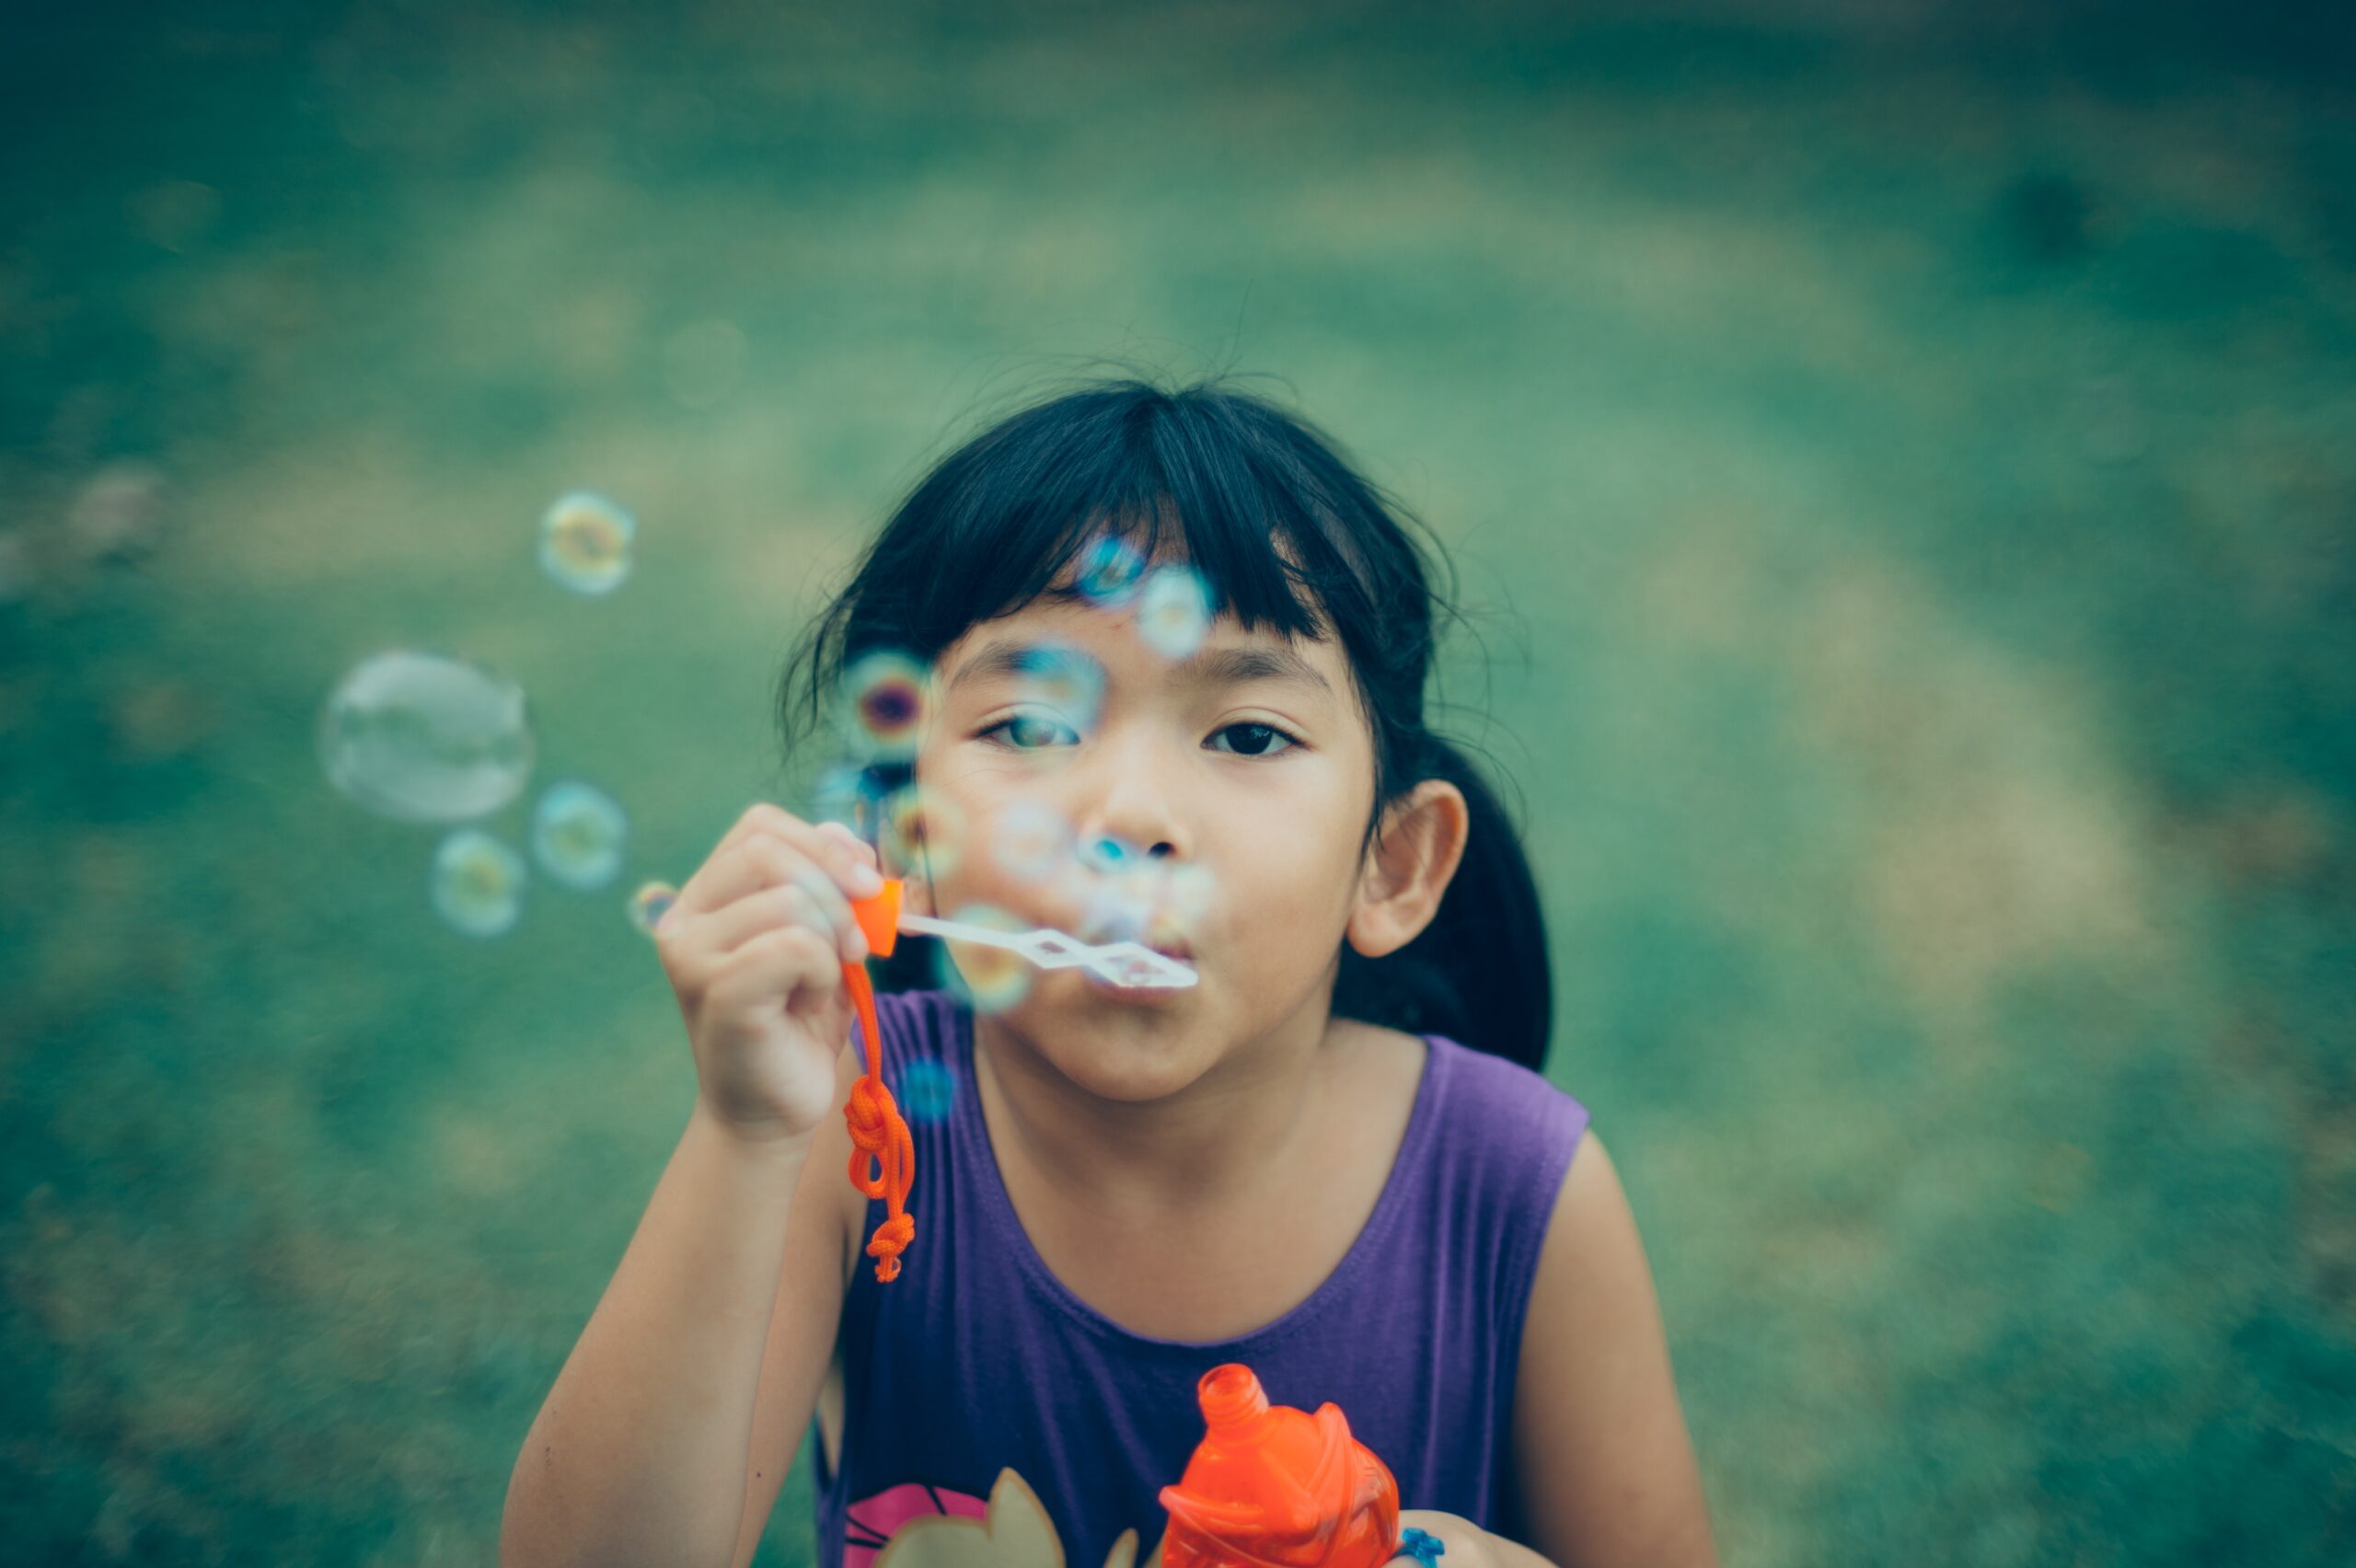 girl blowing bubbles summertime activities